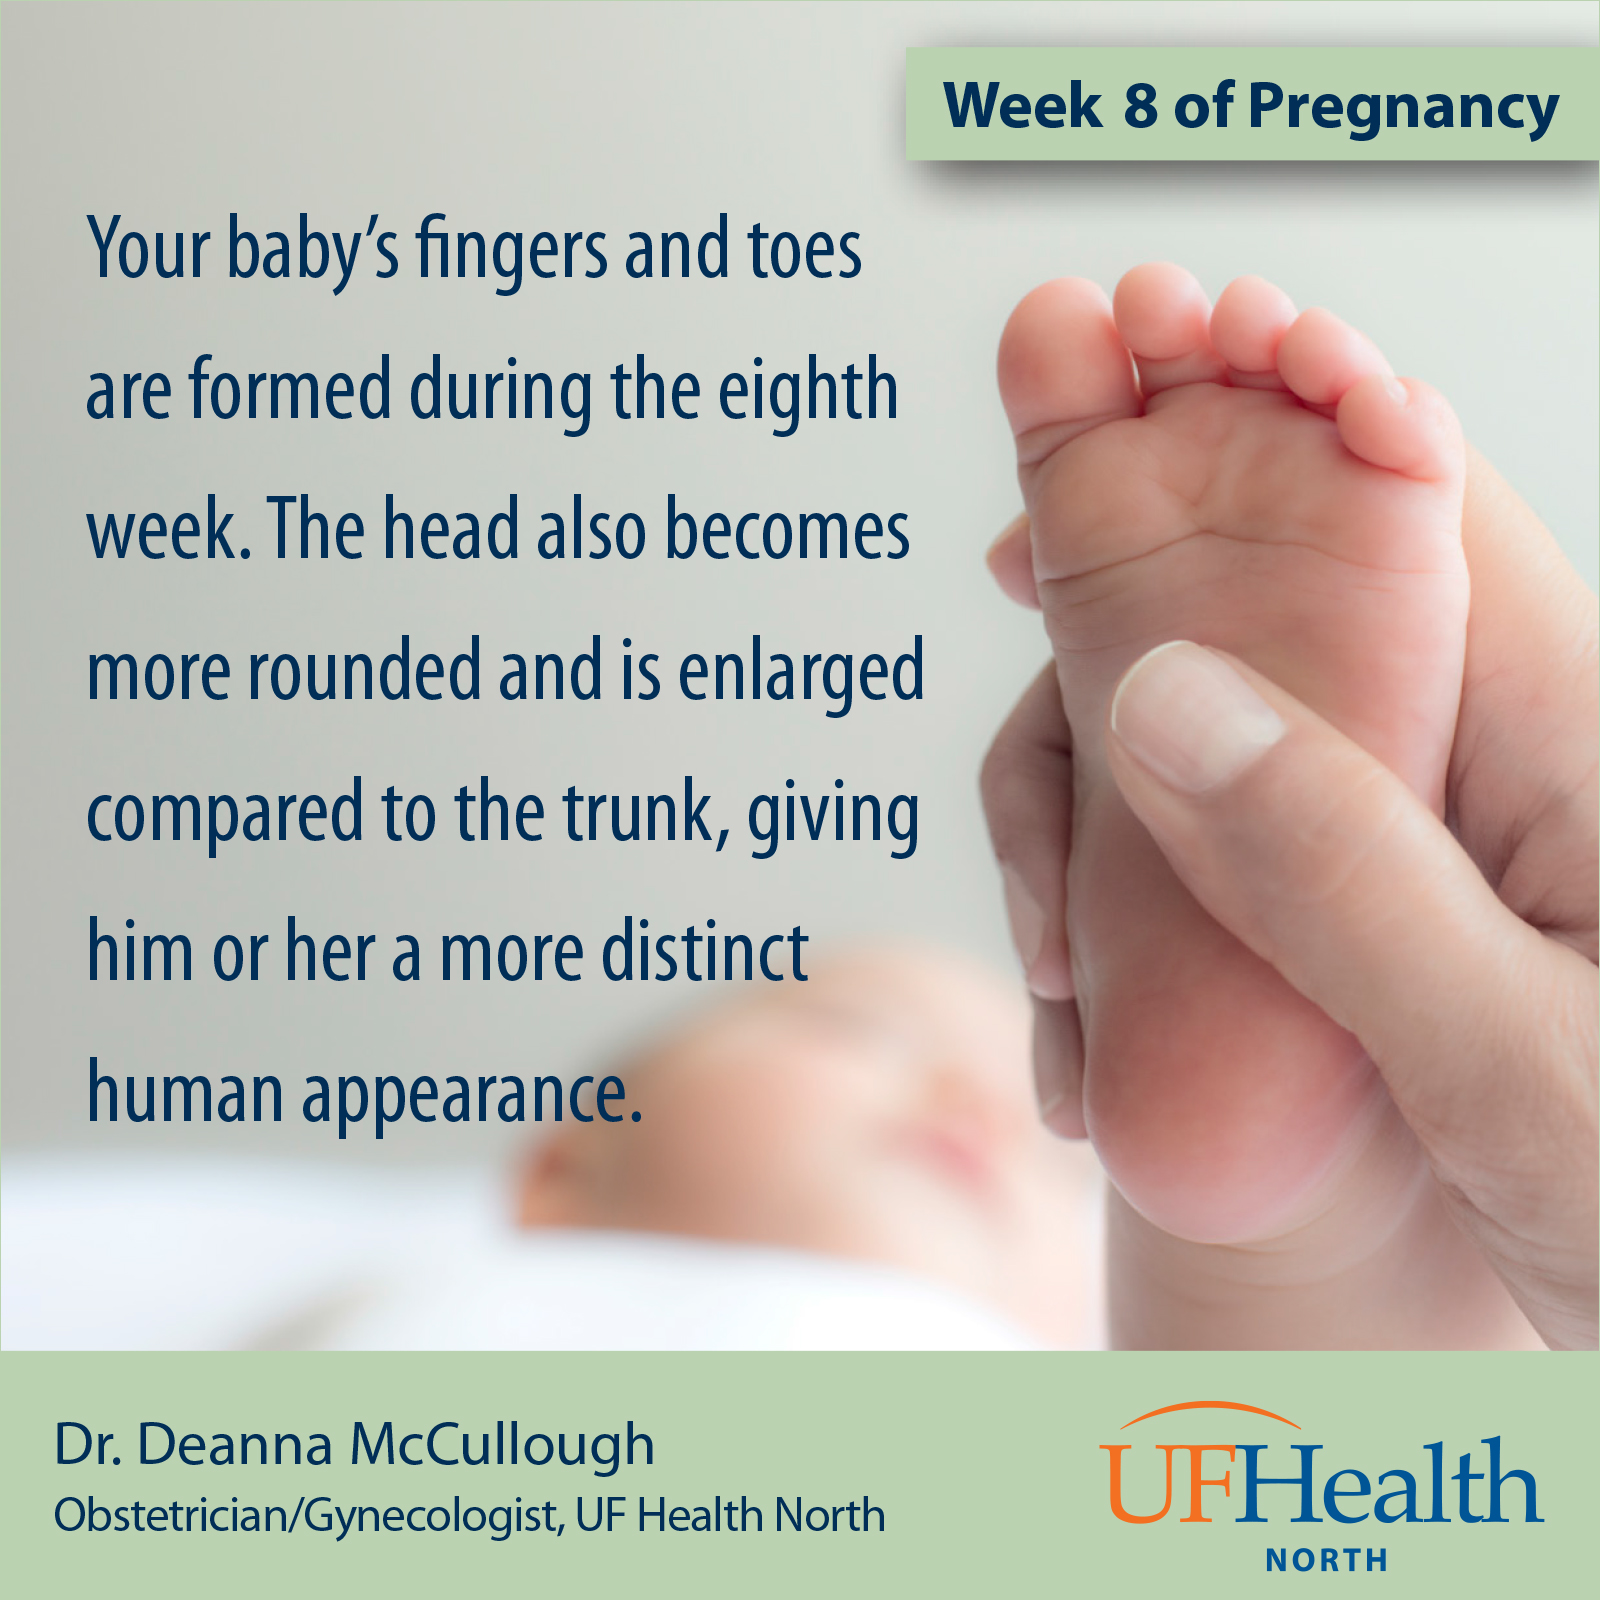 UF Health North pregnancy tip 8